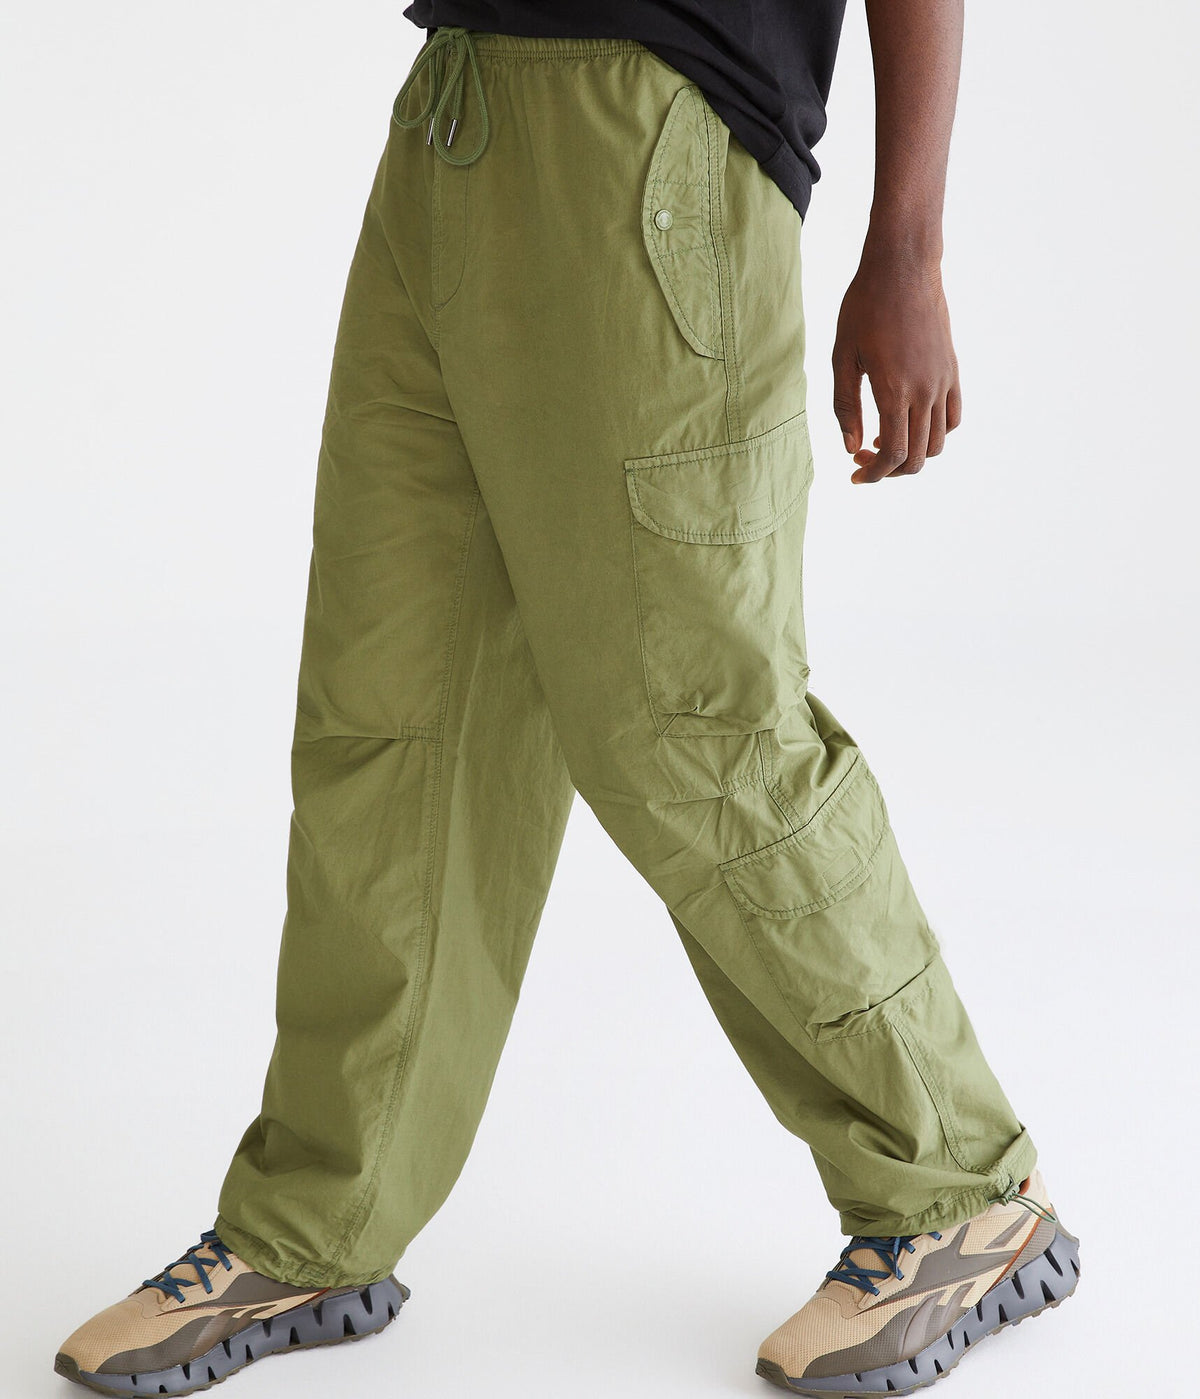 Aeropostale Mens' Cargo Parachute Pants - Green - Size M - Cotton - Teen Fashion & Clothing Everglade Olive